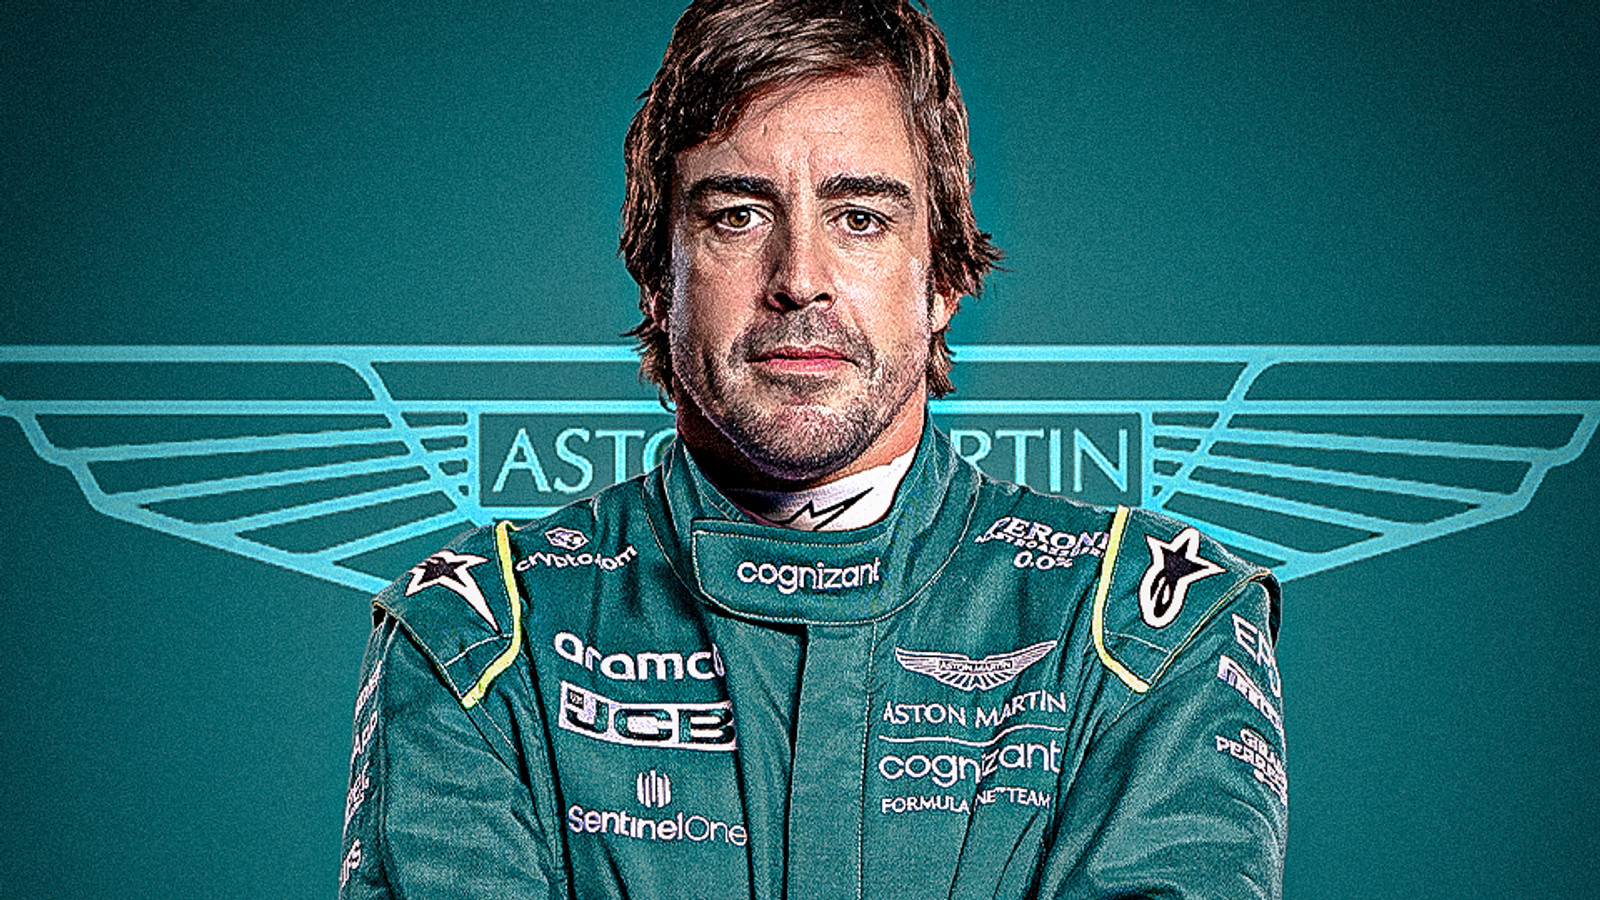 Fernando Alonso to Aston Martin: Ted Kravitz reacts to bombshell F1 move as Alpine lose world champion